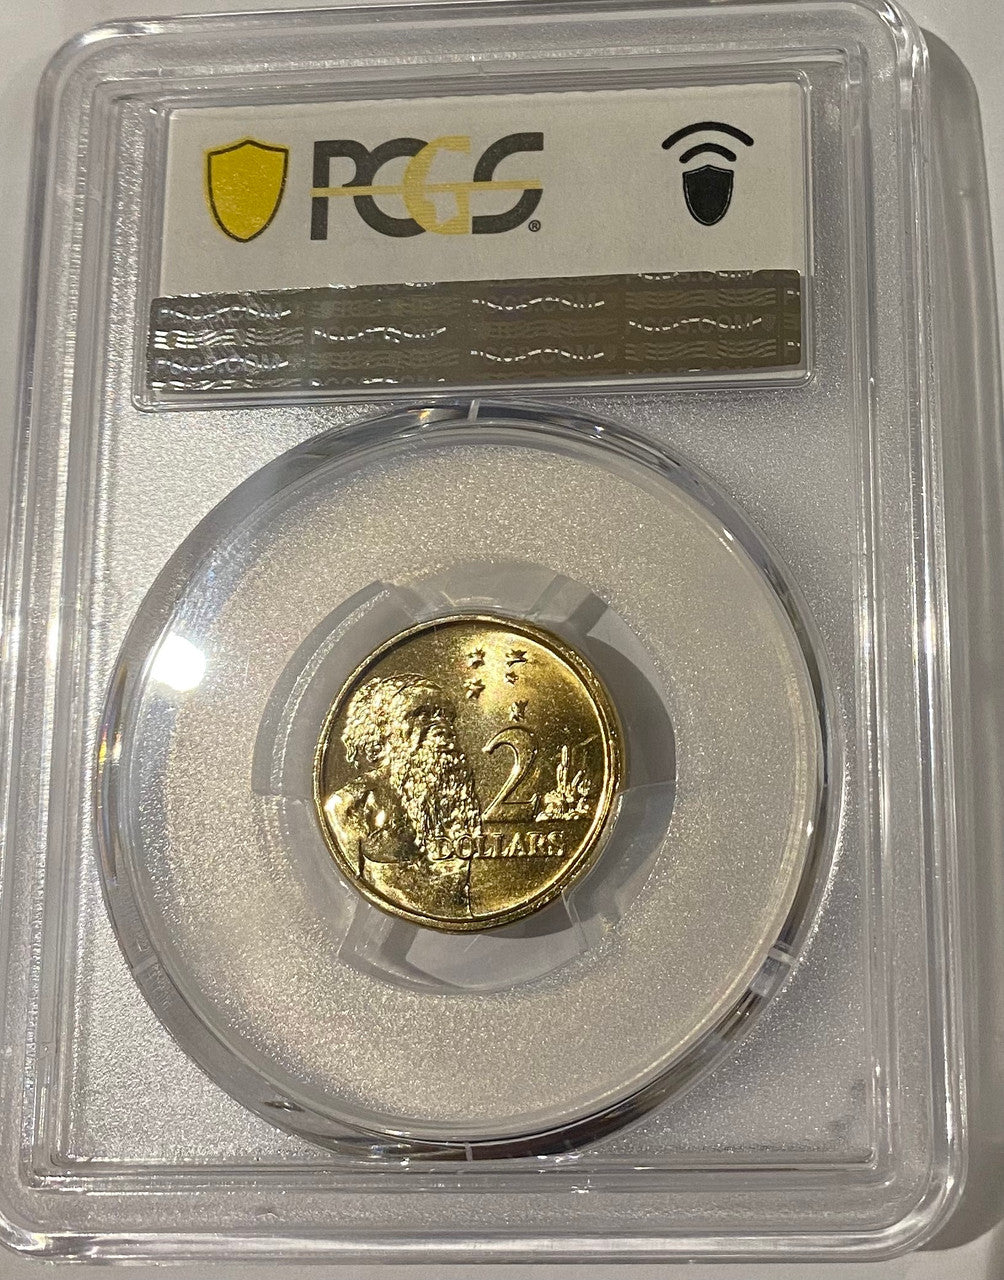 Royal Australian Mint PCGS MS67 2023 $2 Mob of Roos